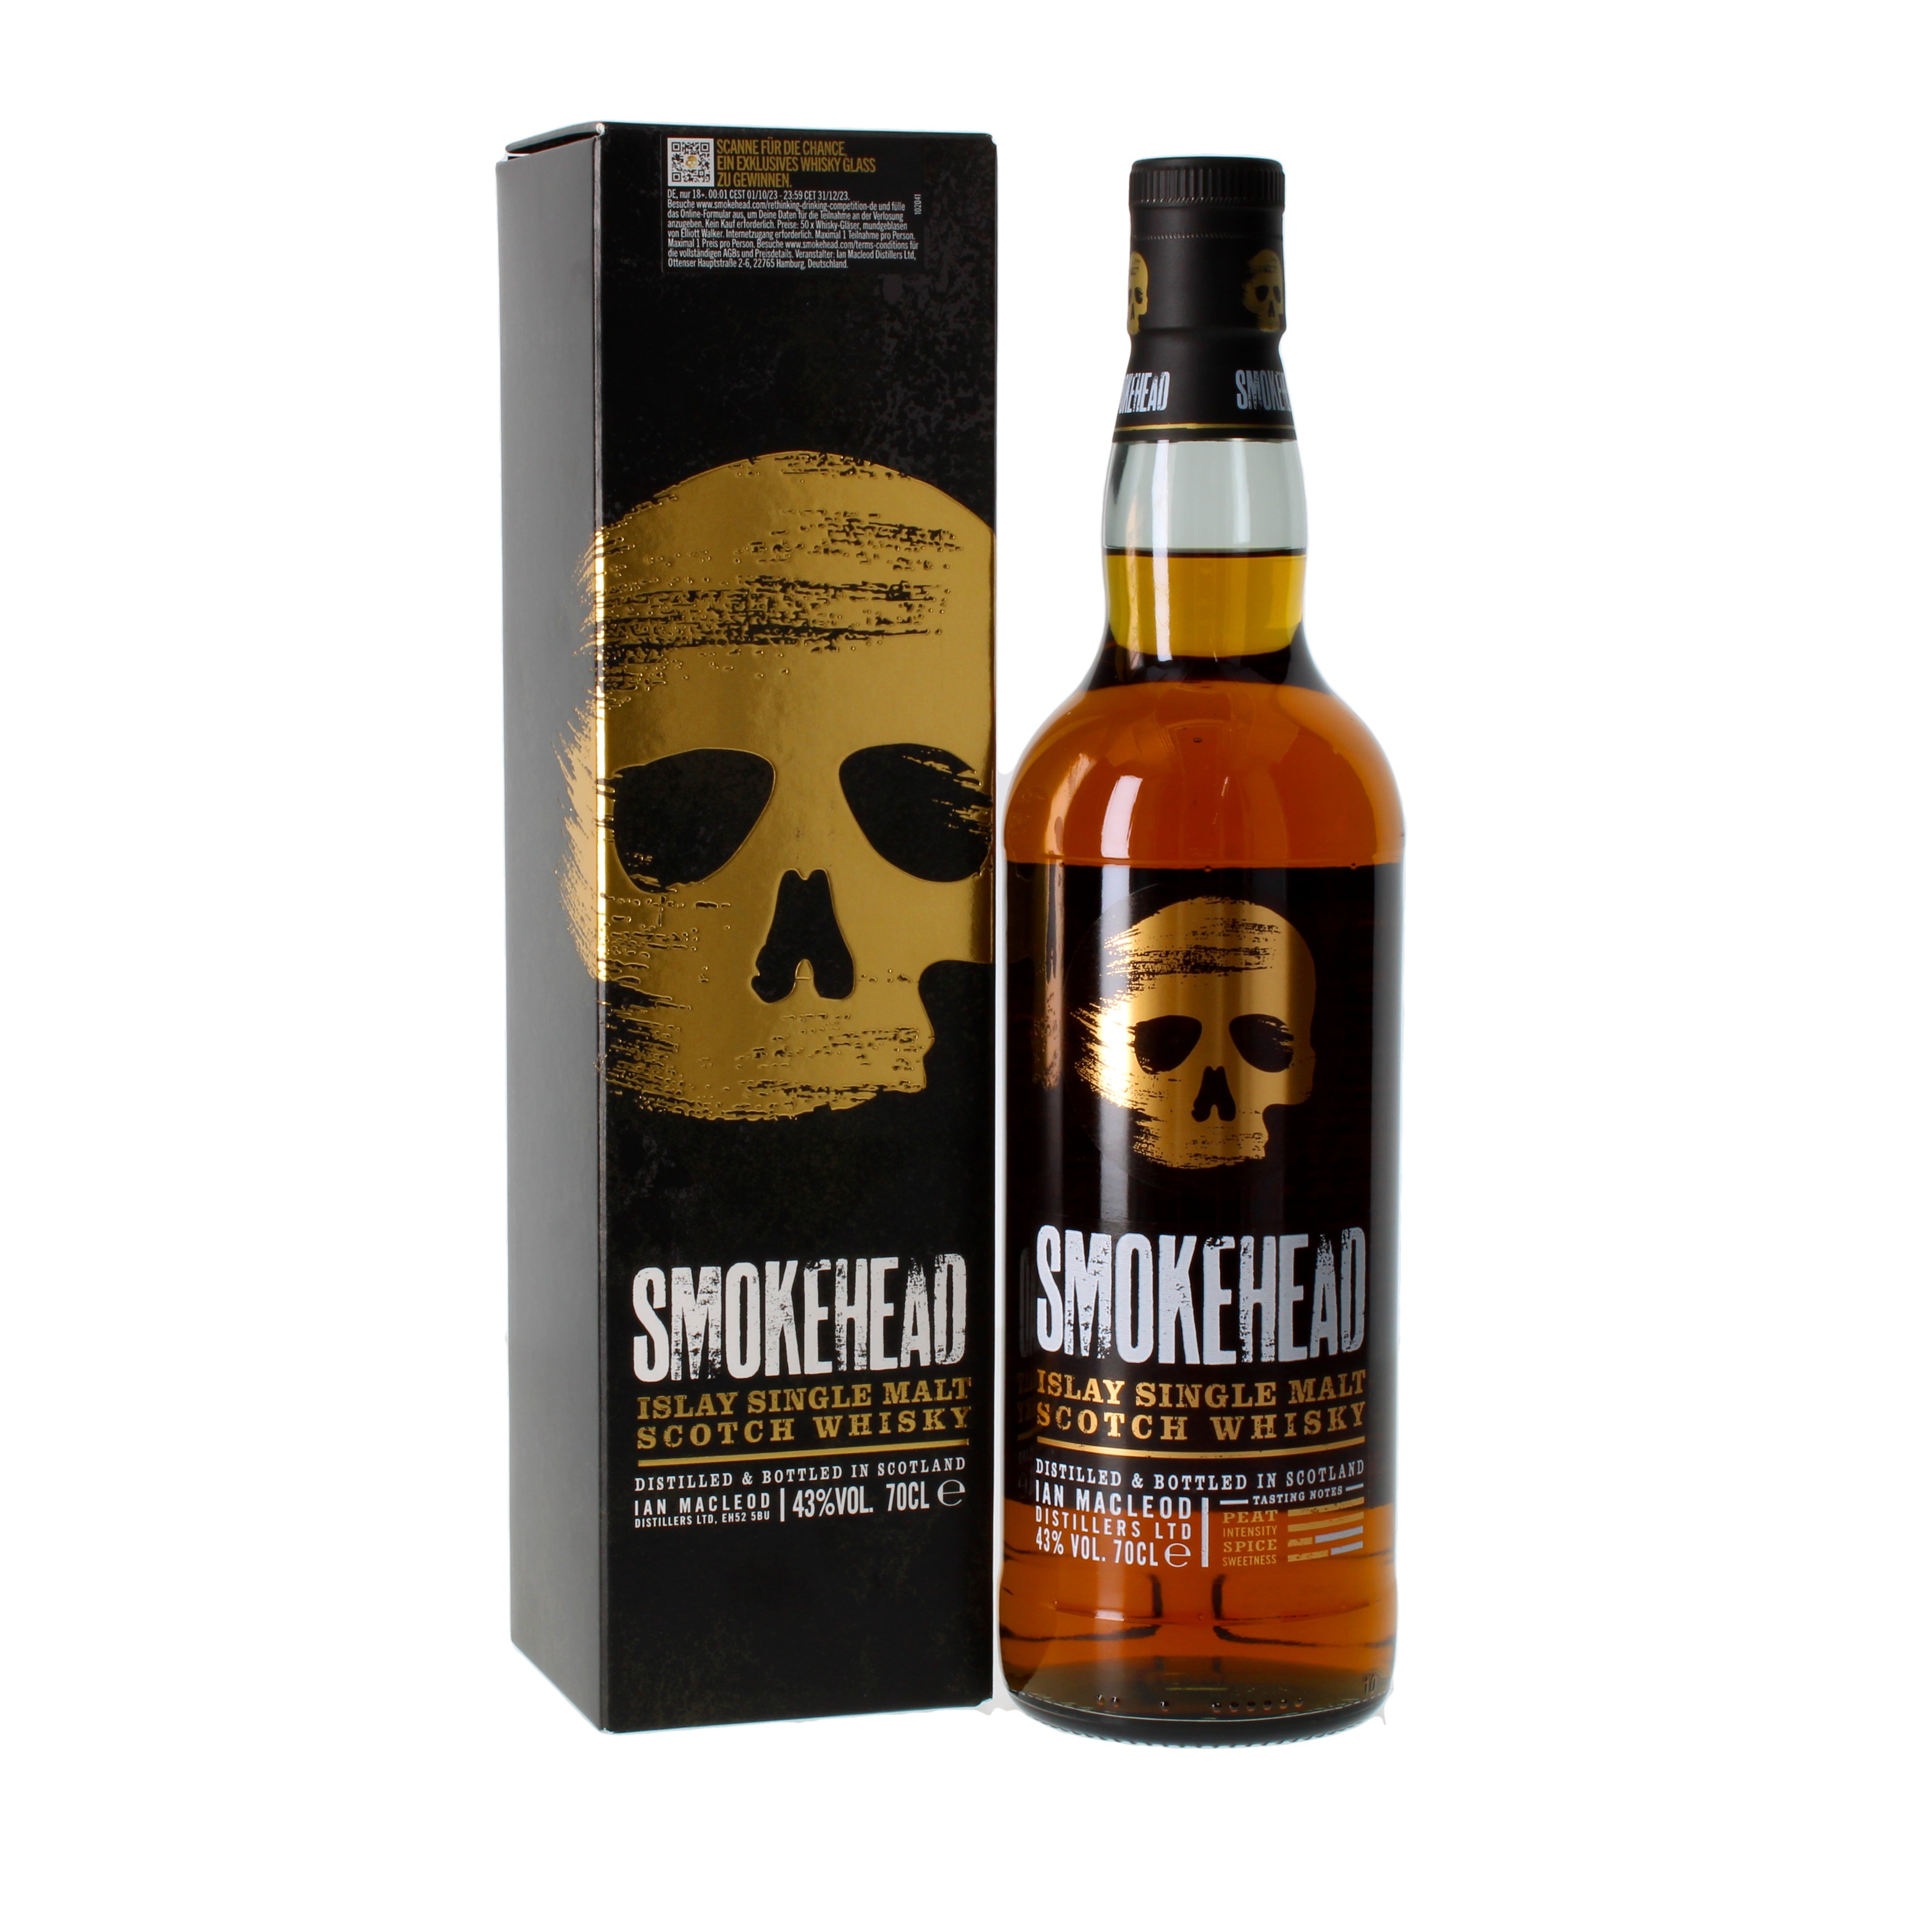 Smokehead Islay Single Malt Scotch Whisky 0,7l, alk. 43 tilavuusprosenttia.